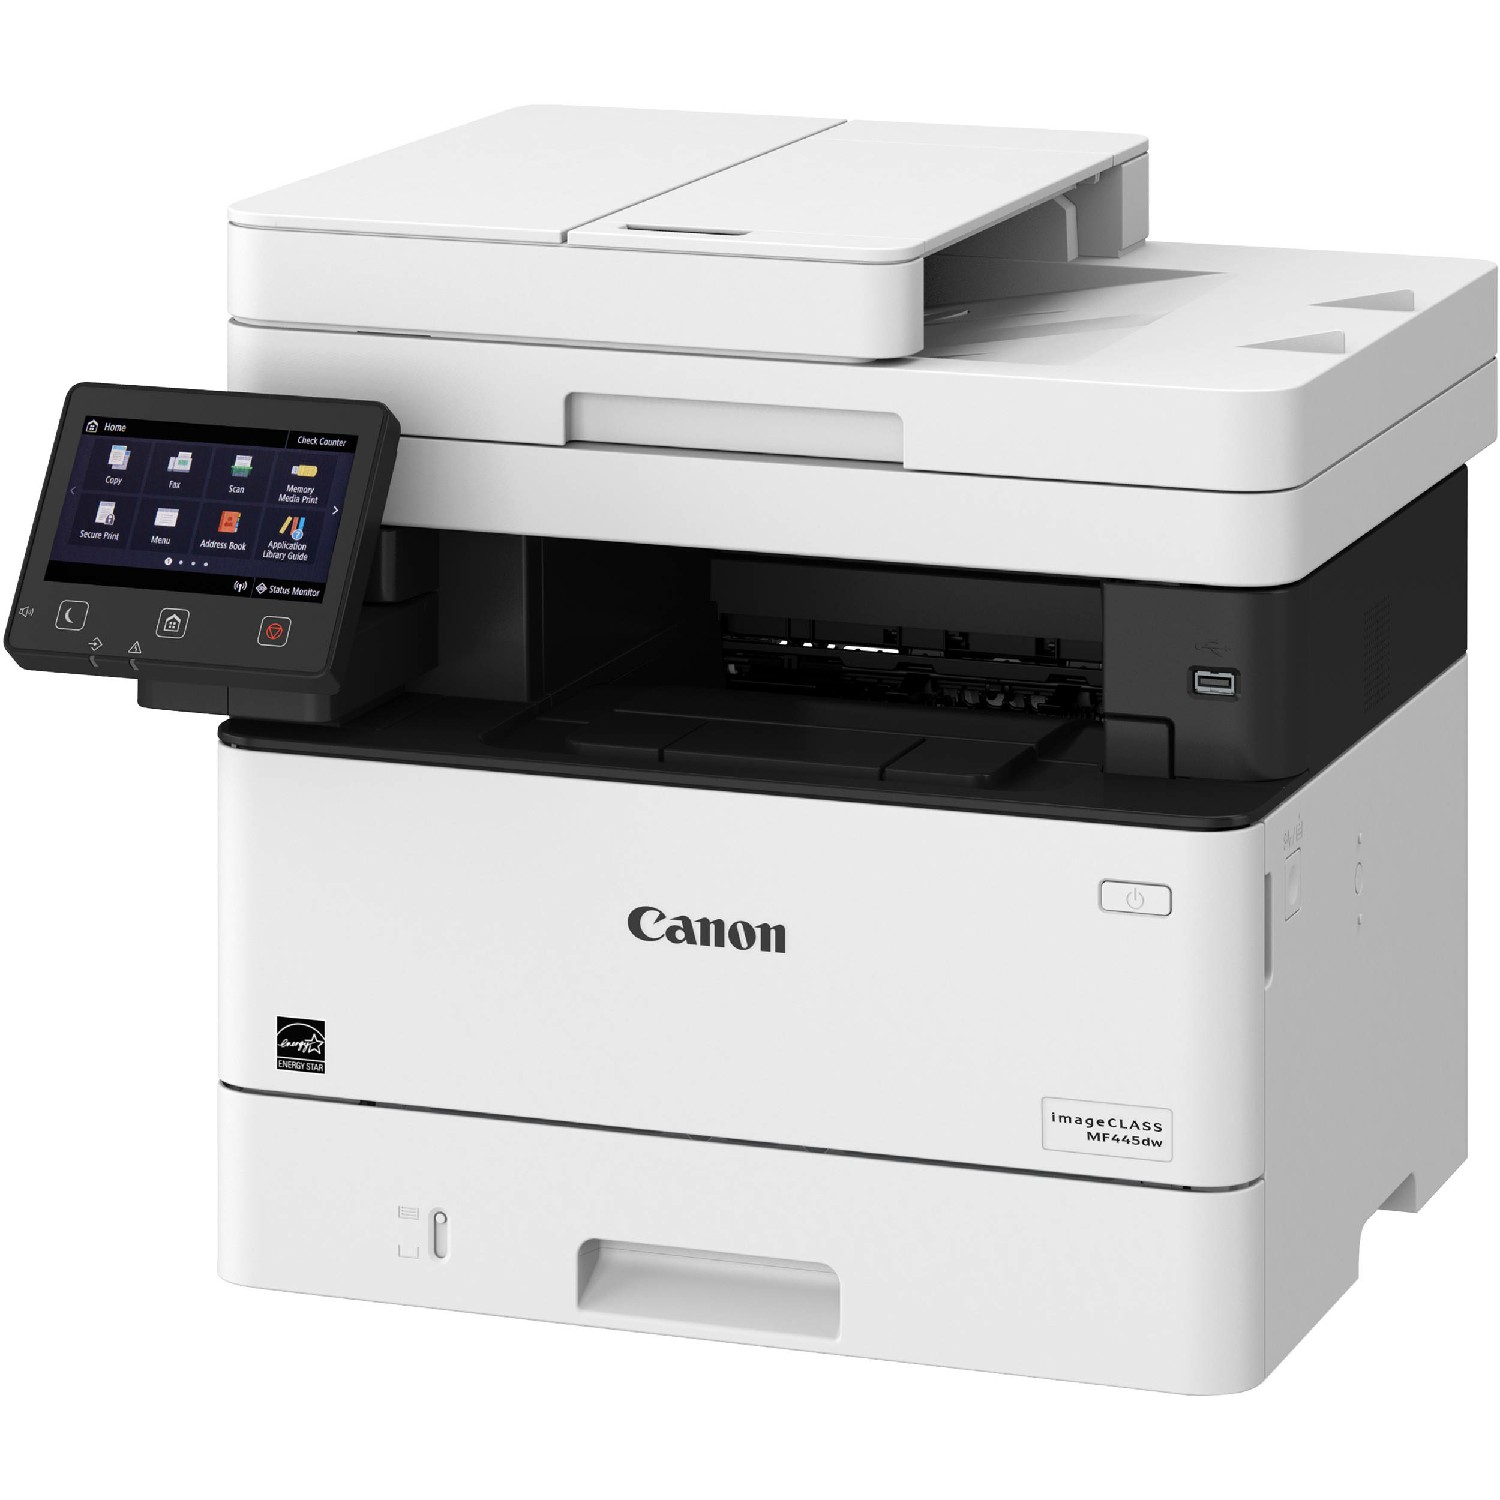 Canon imageCLASS MF445dw Monochrome Laser Printer (3514C007AA)